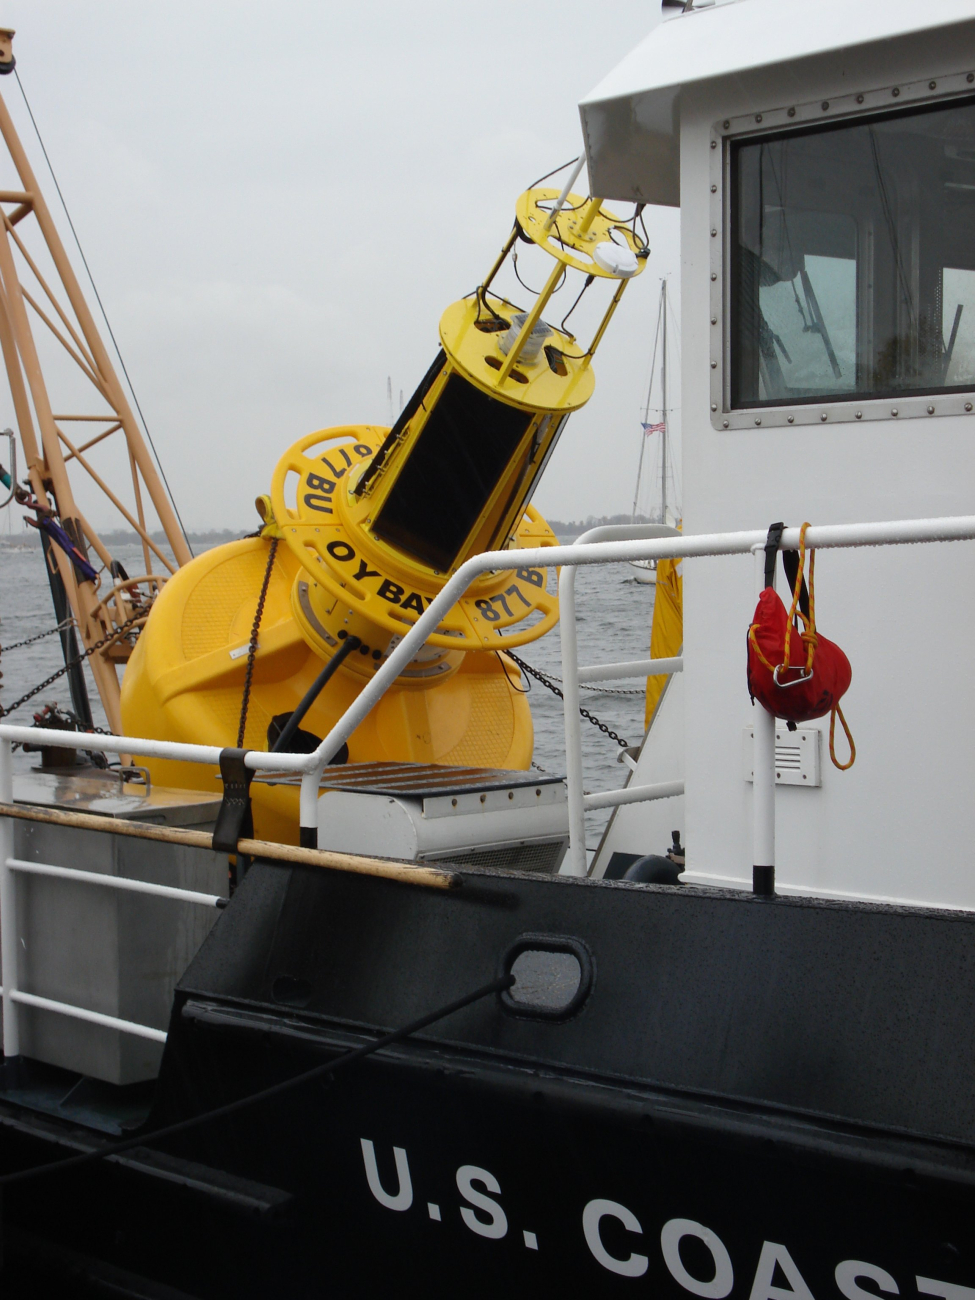 A buoy of the Chesapeake Bay Interpretive Buoy System ready for deploymentfrom Coast Guard Buoy tender